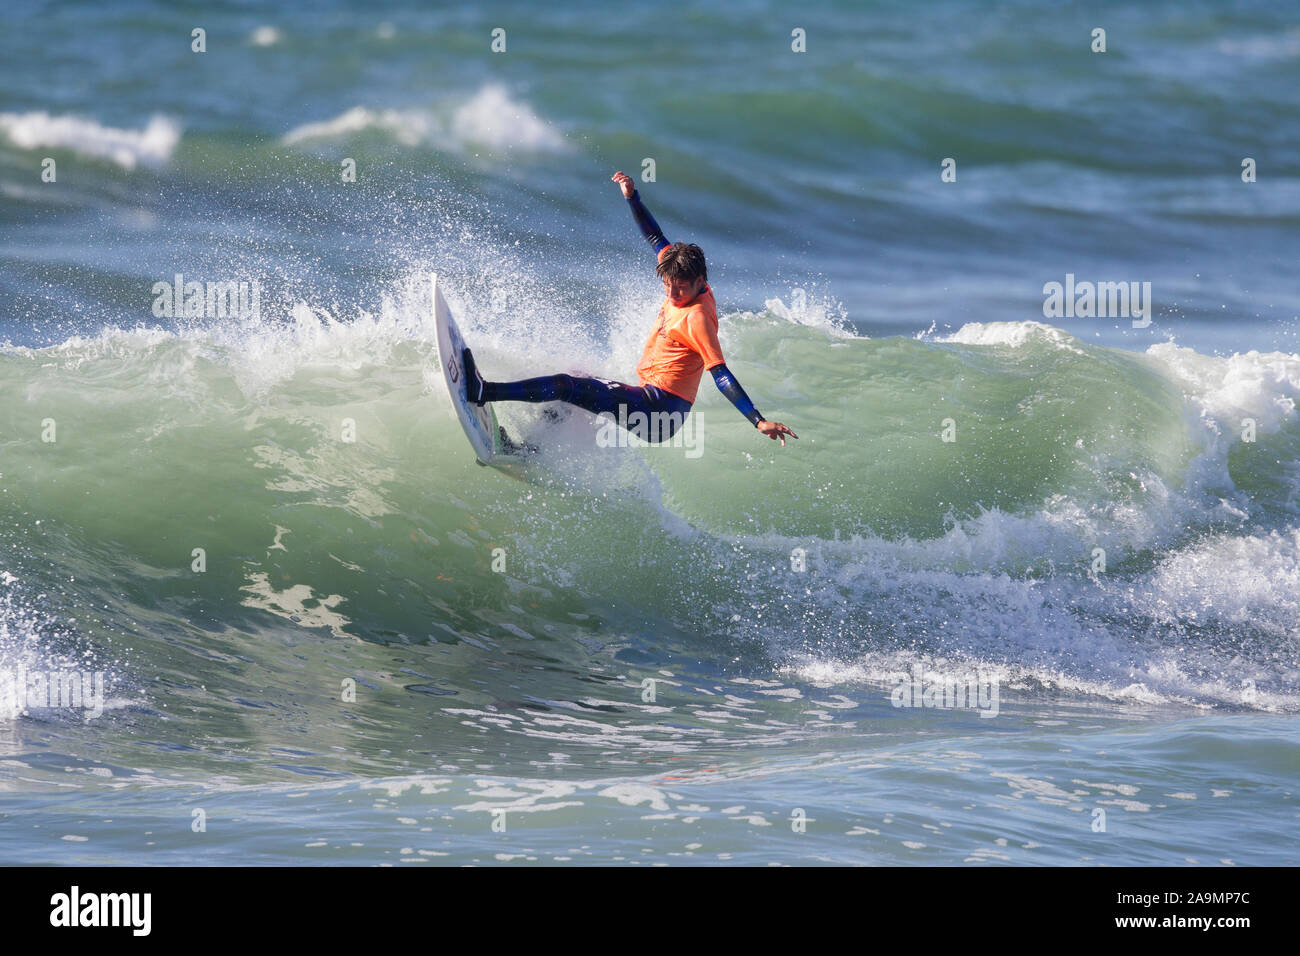 Surfer wearing Orange Shirt Cut Back Stock Photo